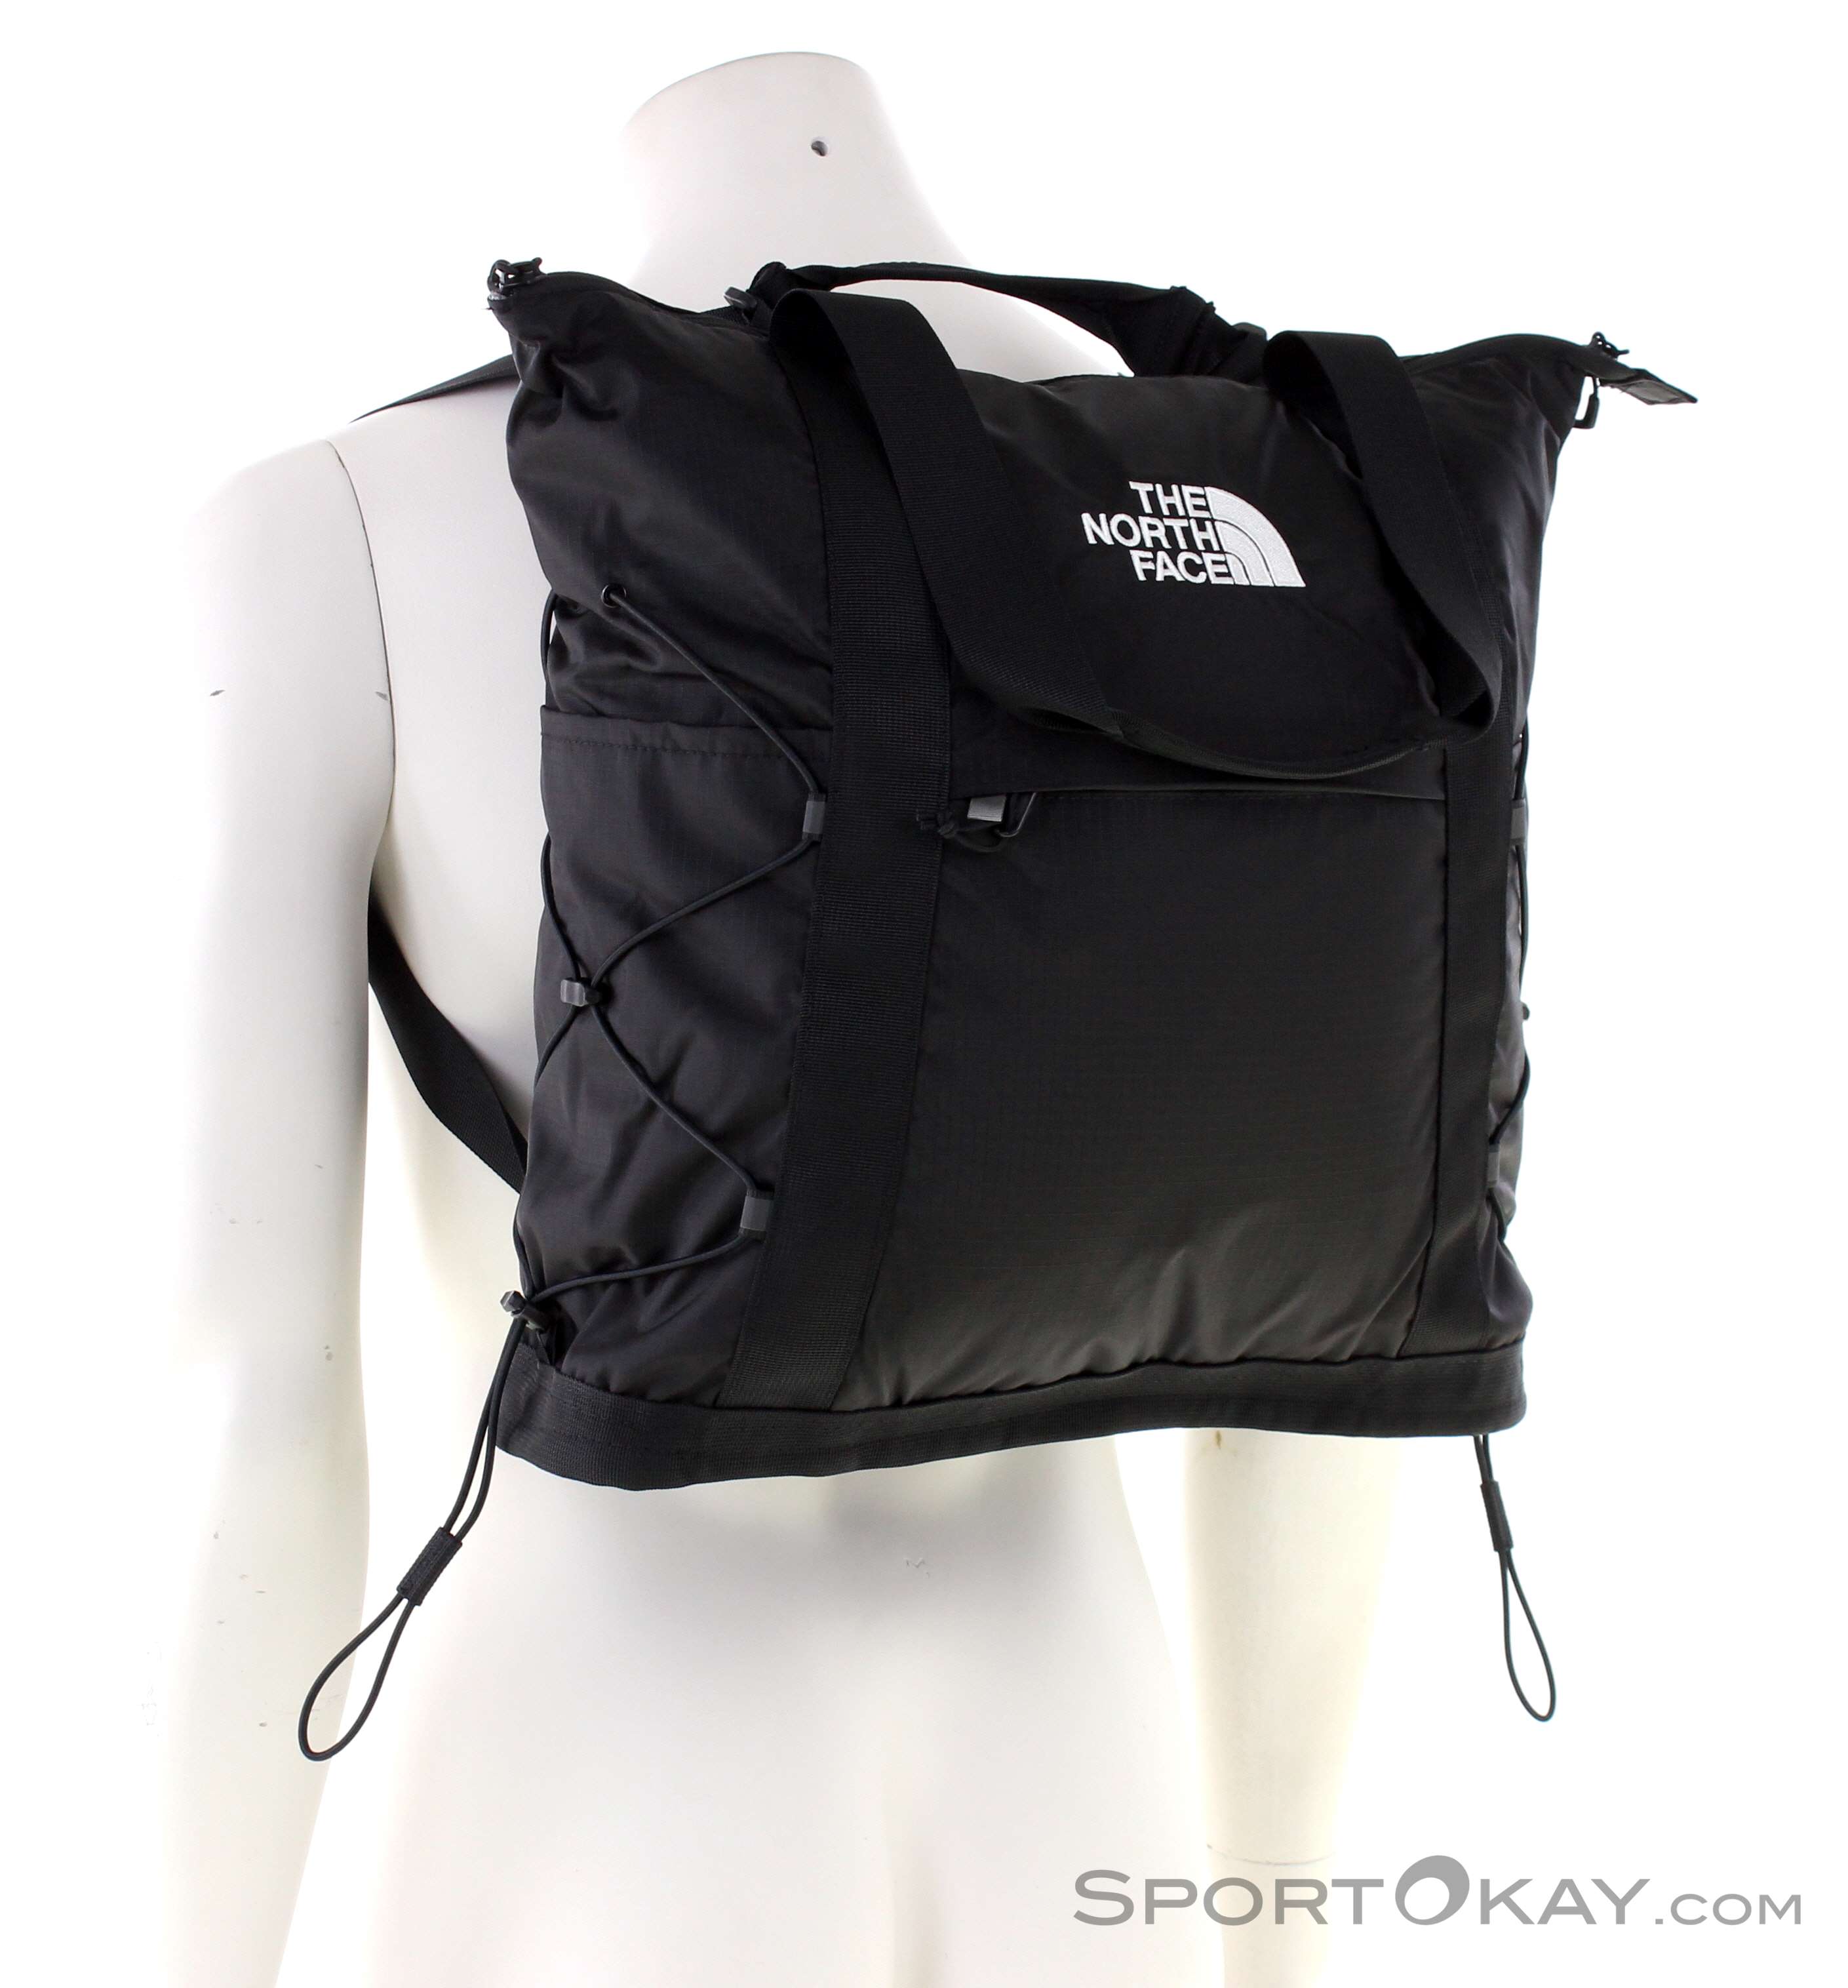 Lavaredo 30L Backpack  Salewa® International